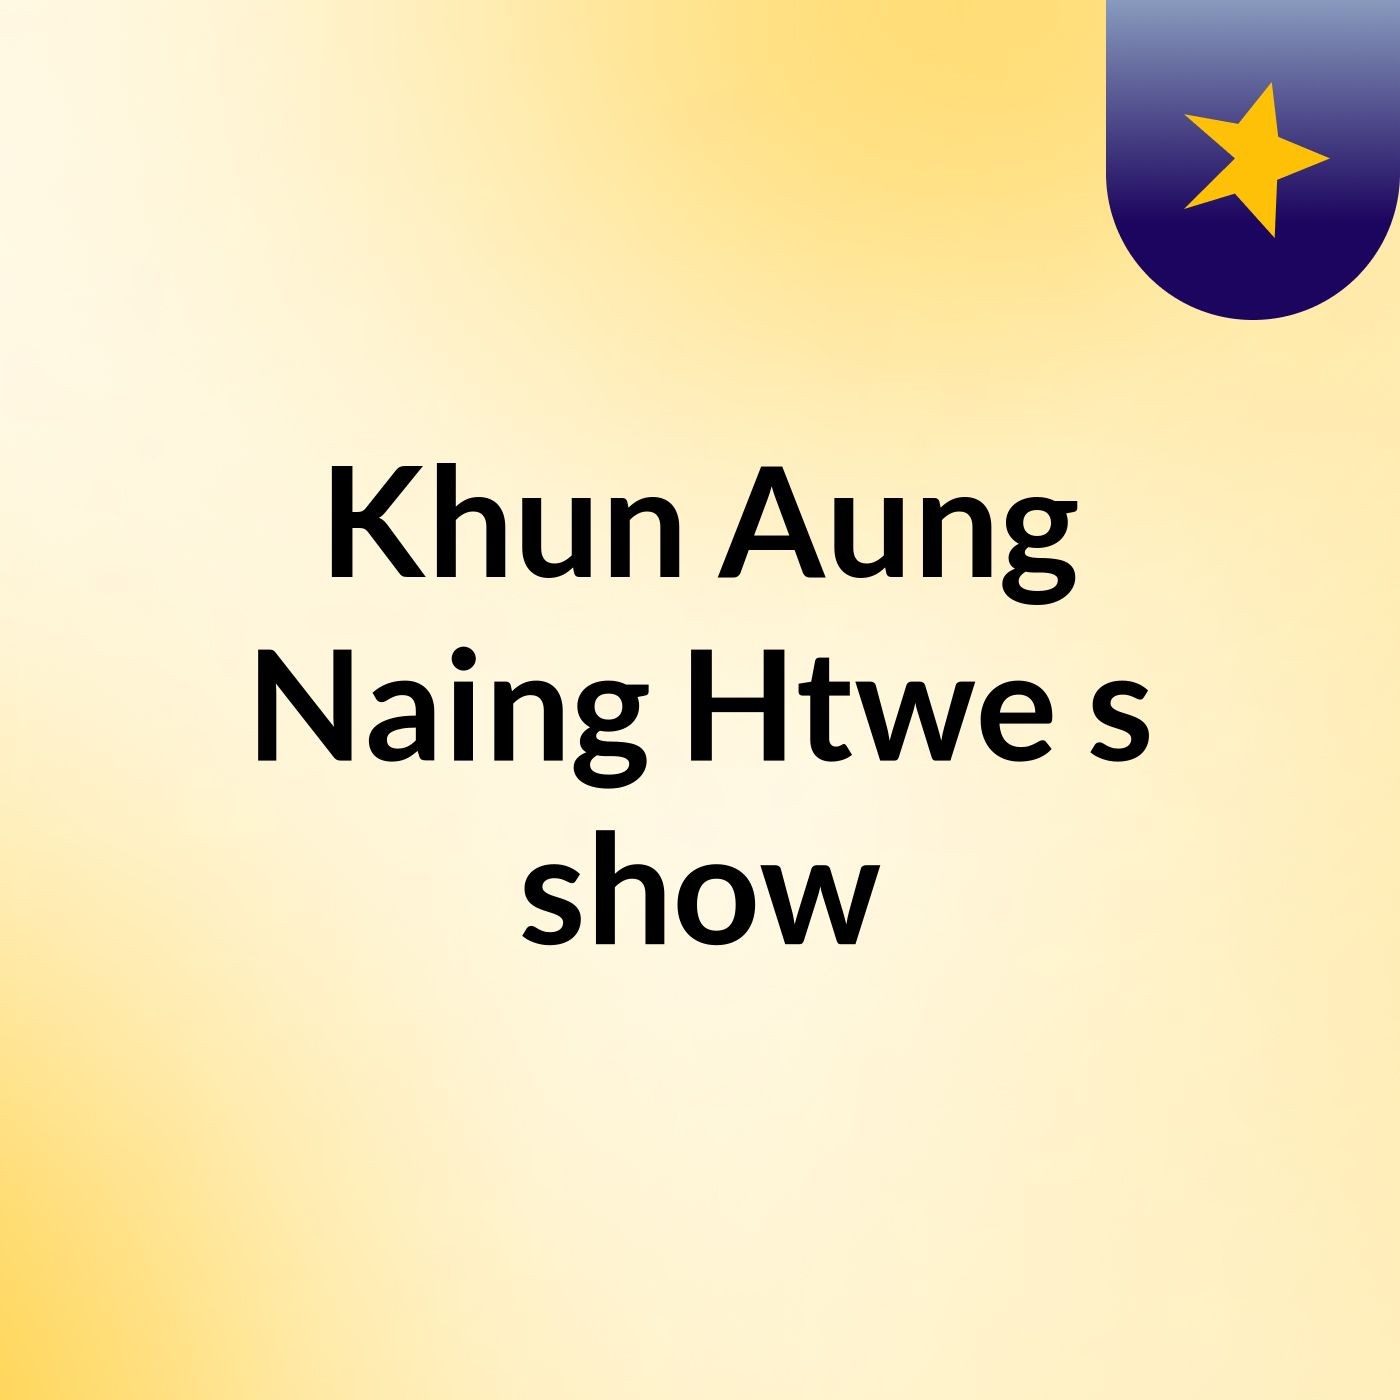 Khun Aung Naing Htwe's show